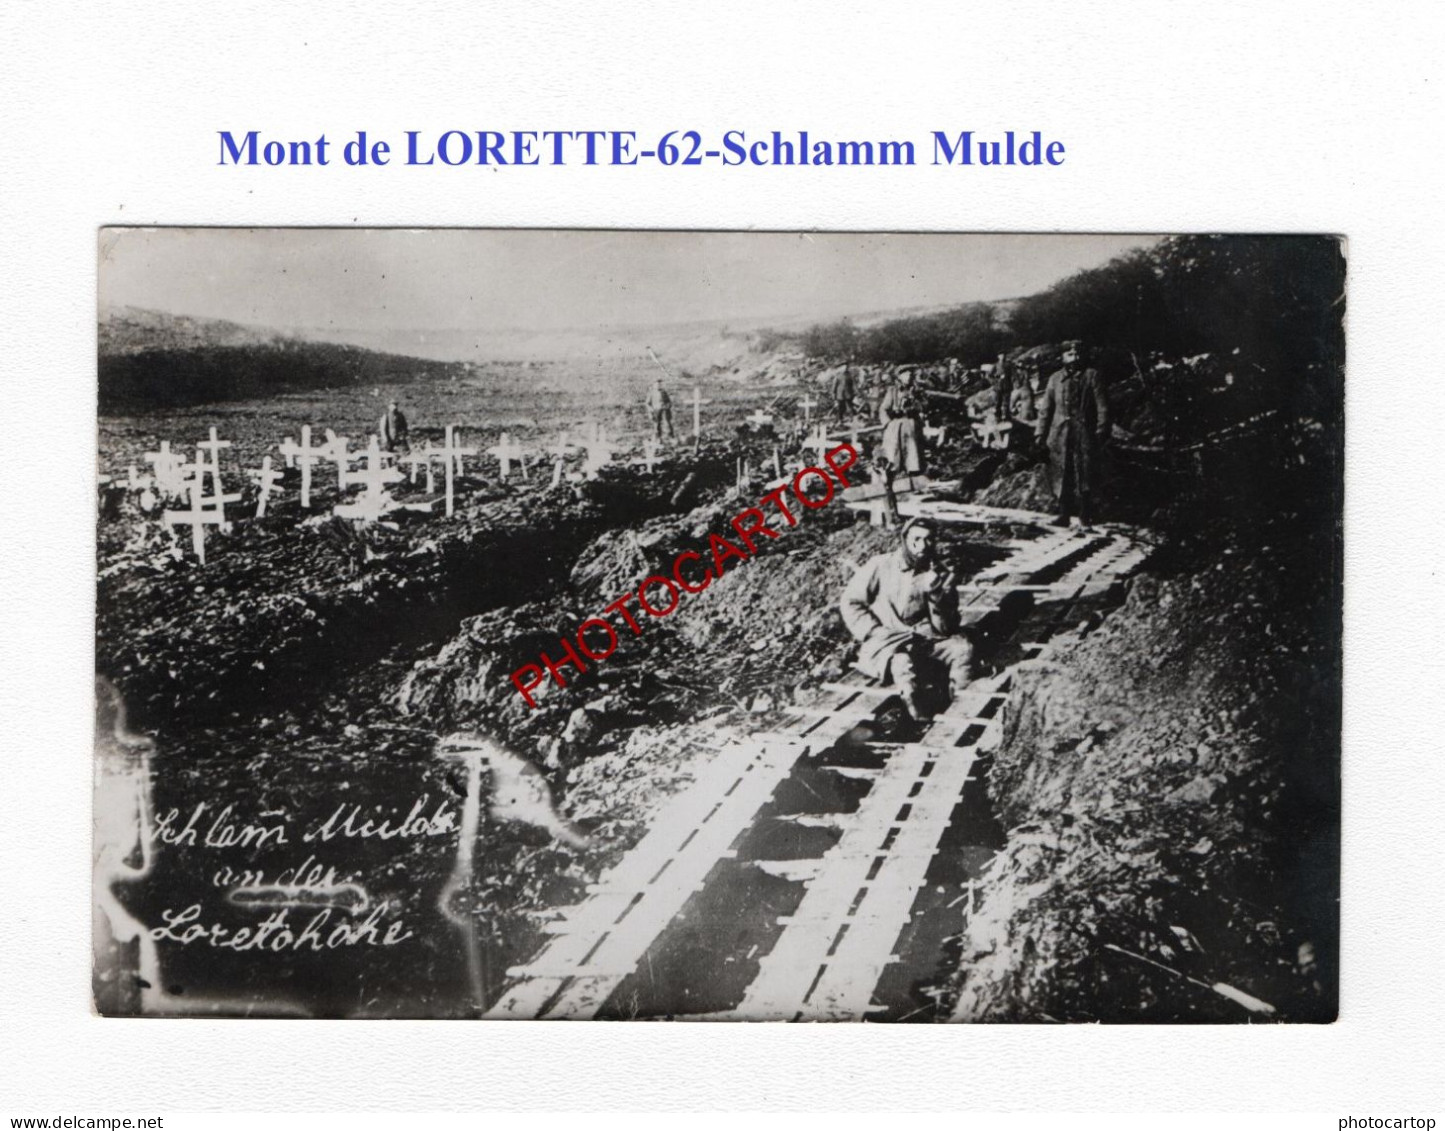 Mont De LORETTE-Loretto-62-Schlamm Mulde-Cimetiere-Tombes-CARTE PHOTO Allemande-GUERRE 14-18-1 WK-MILITARIA- - War Cemeteries